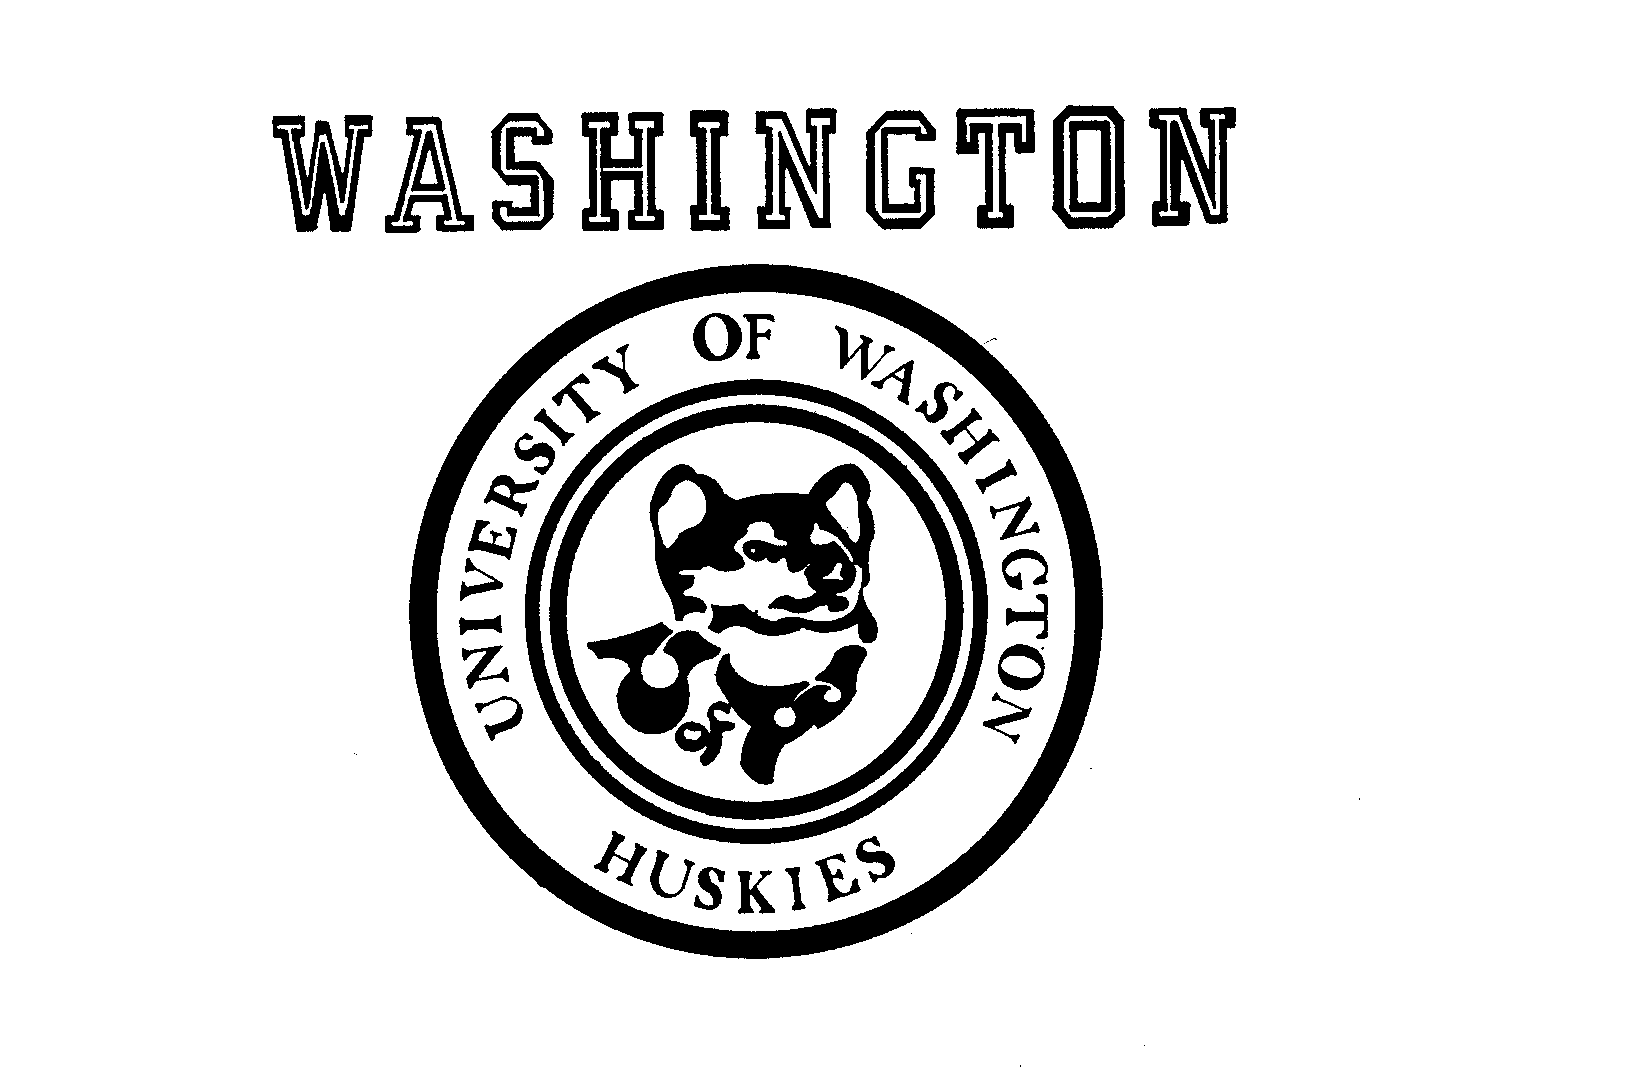  WASHINGTON UNIVERSITY OF WASHINGTON HUSKIES